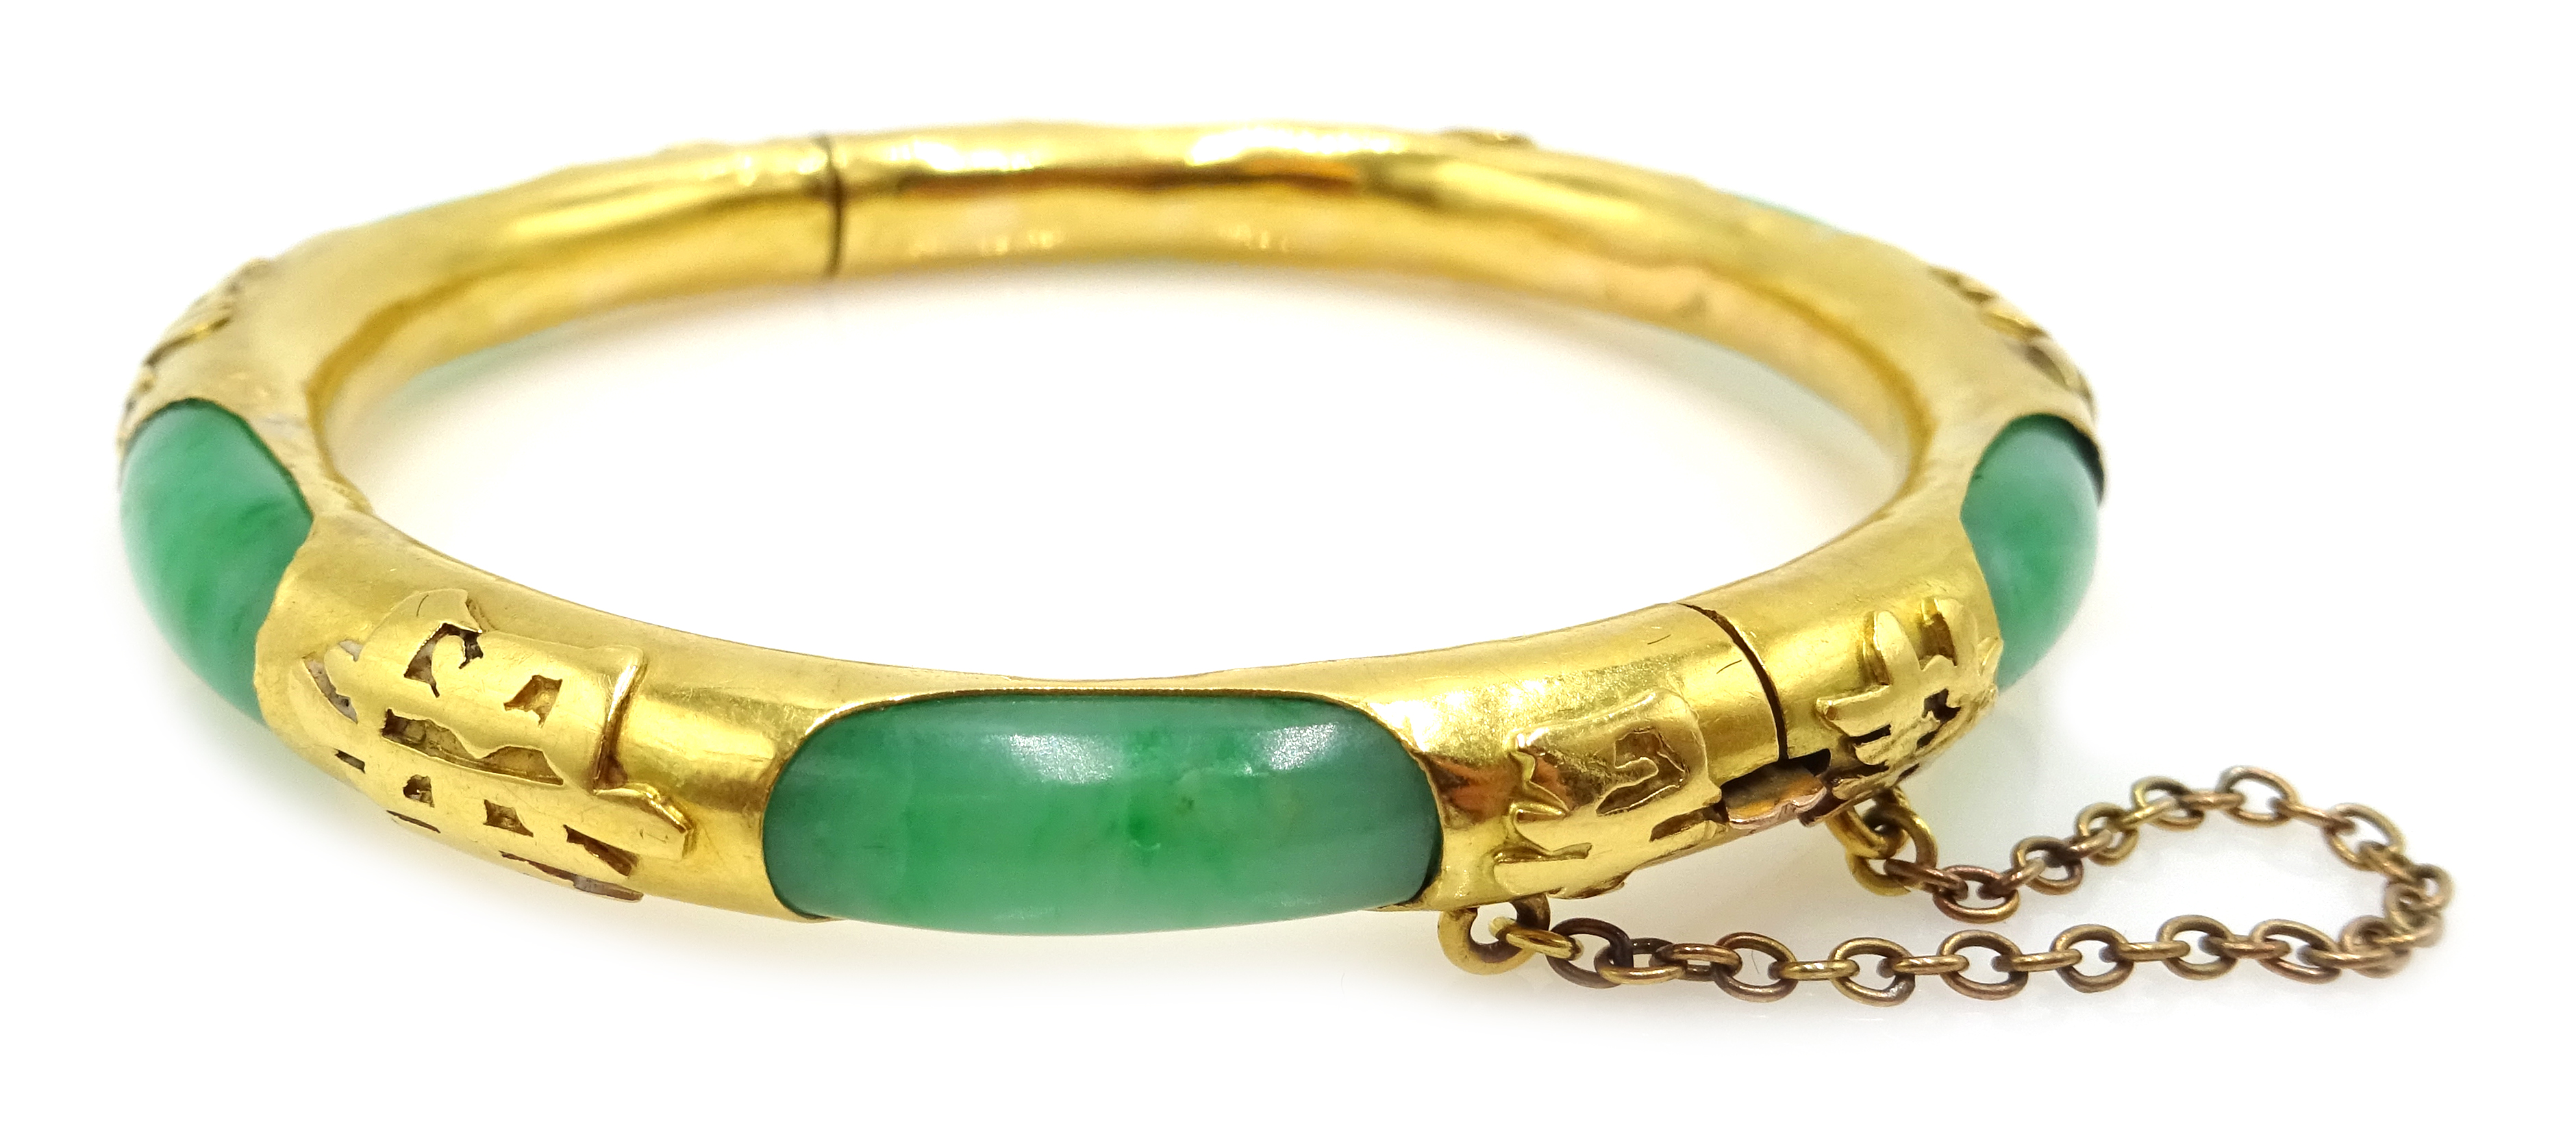 19th century Chinese gold and jade hinged bangle,